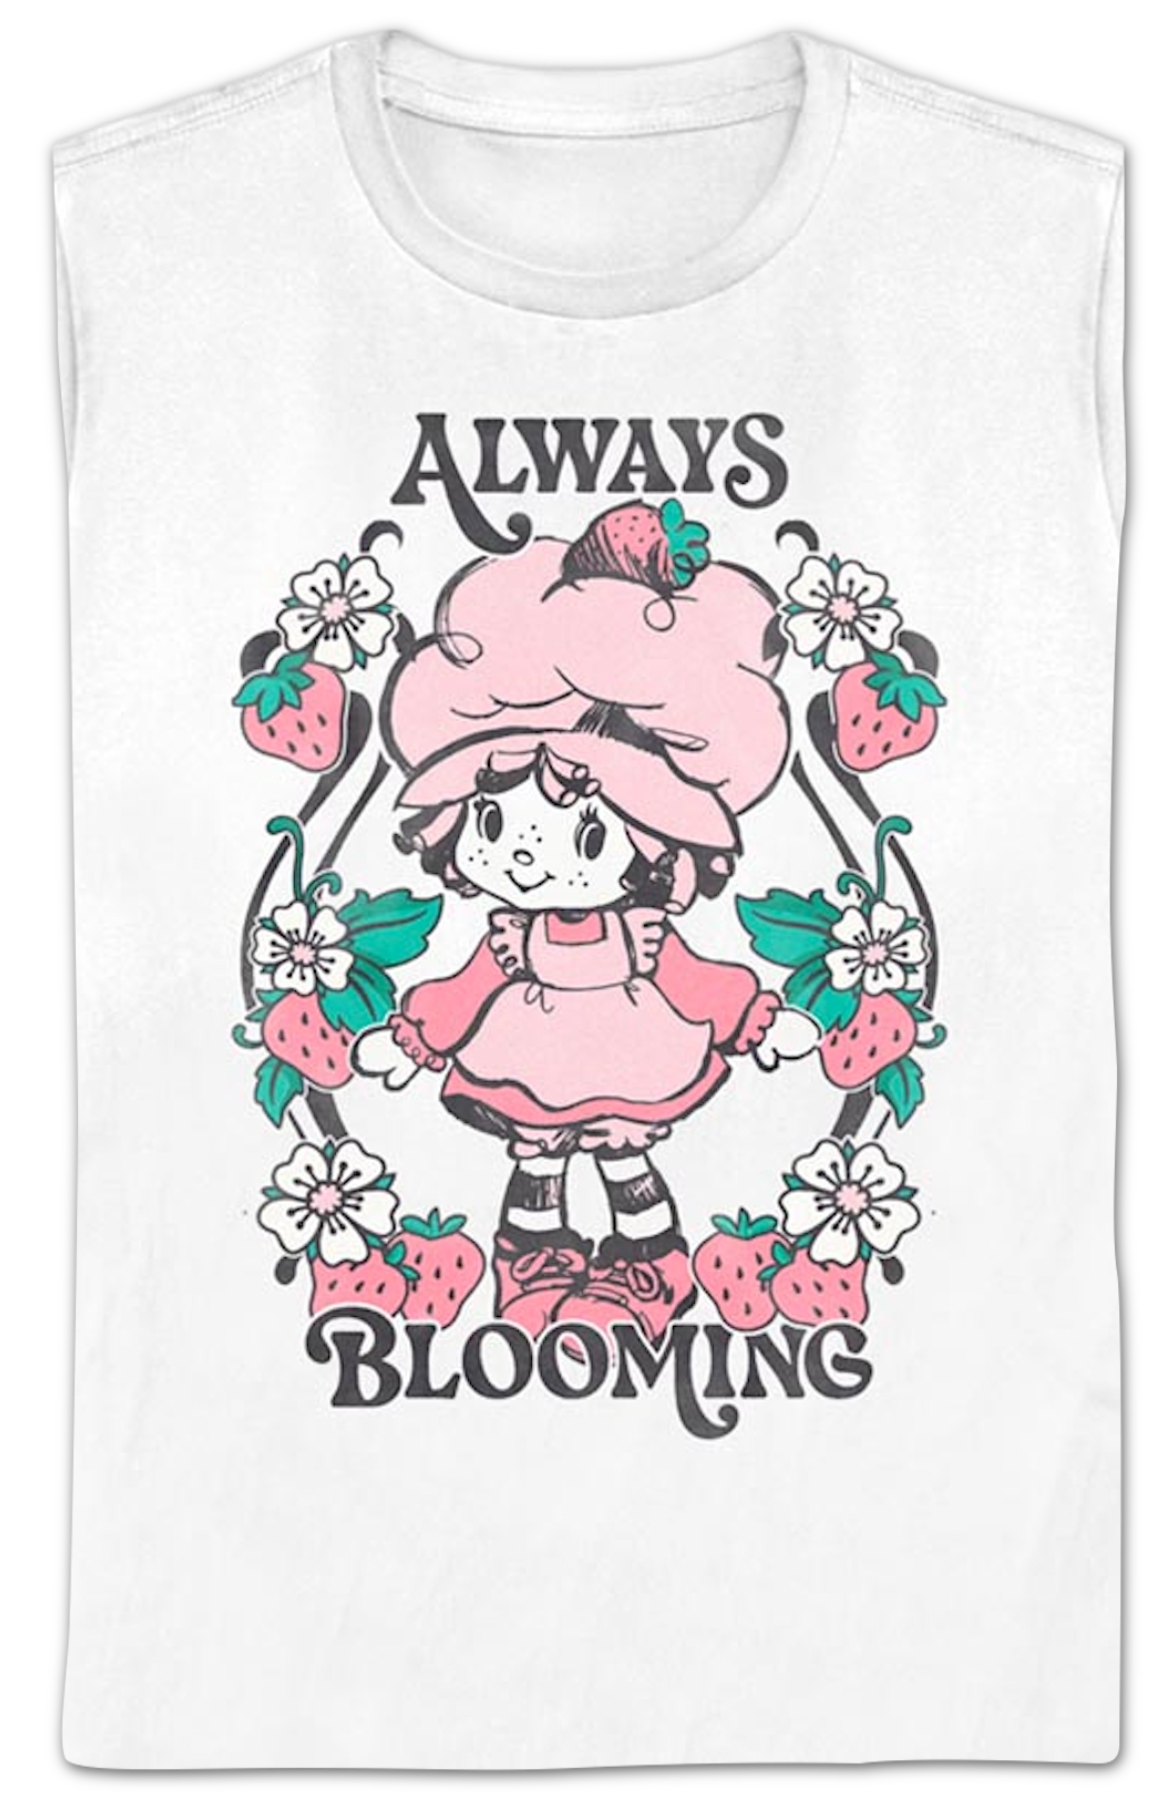 Womens Always Blooming Strawberry Shortcake Shirt